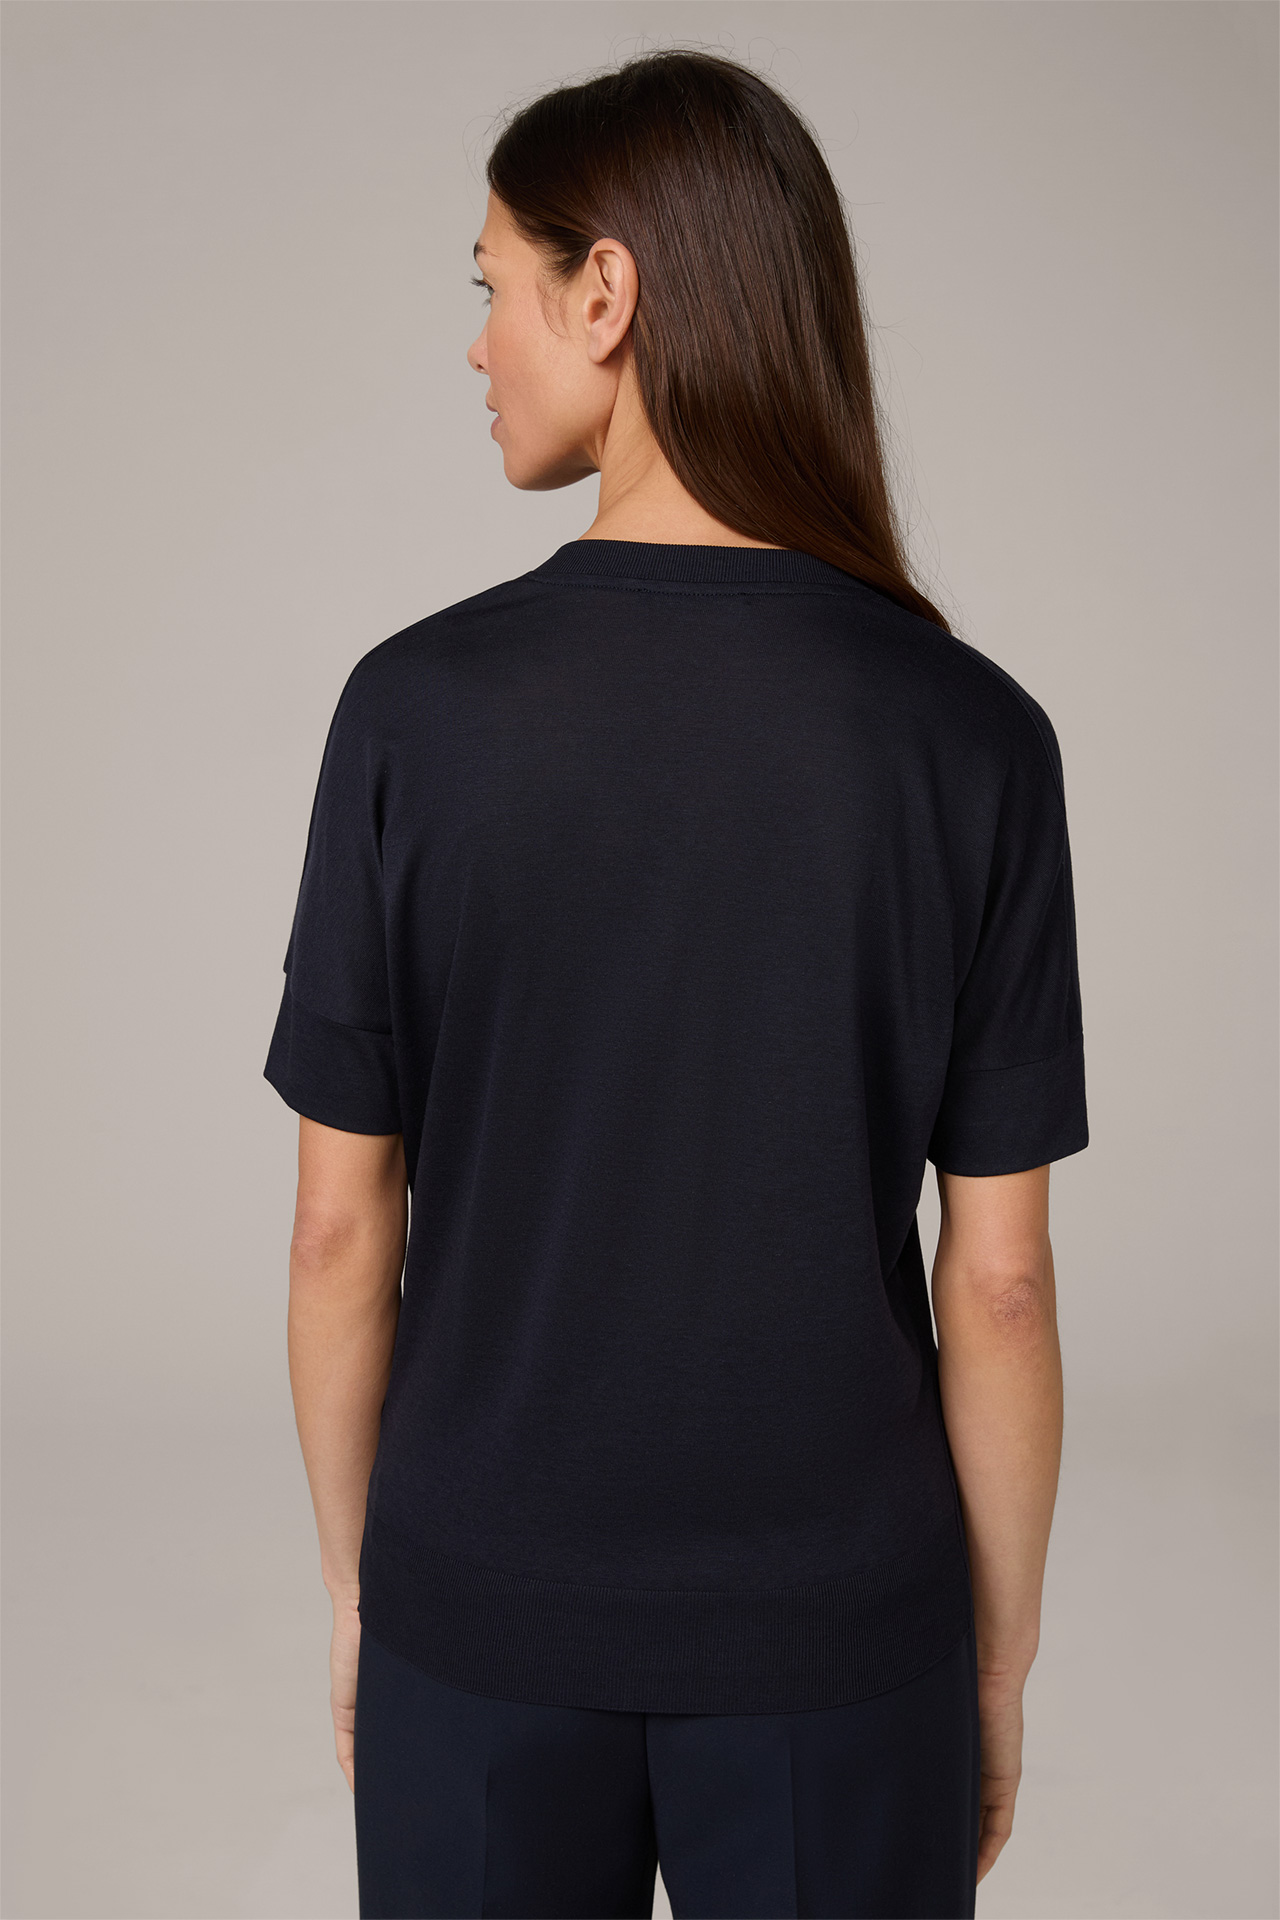 T-shirt en Tencel et coton à encolure en V, en bleu marine